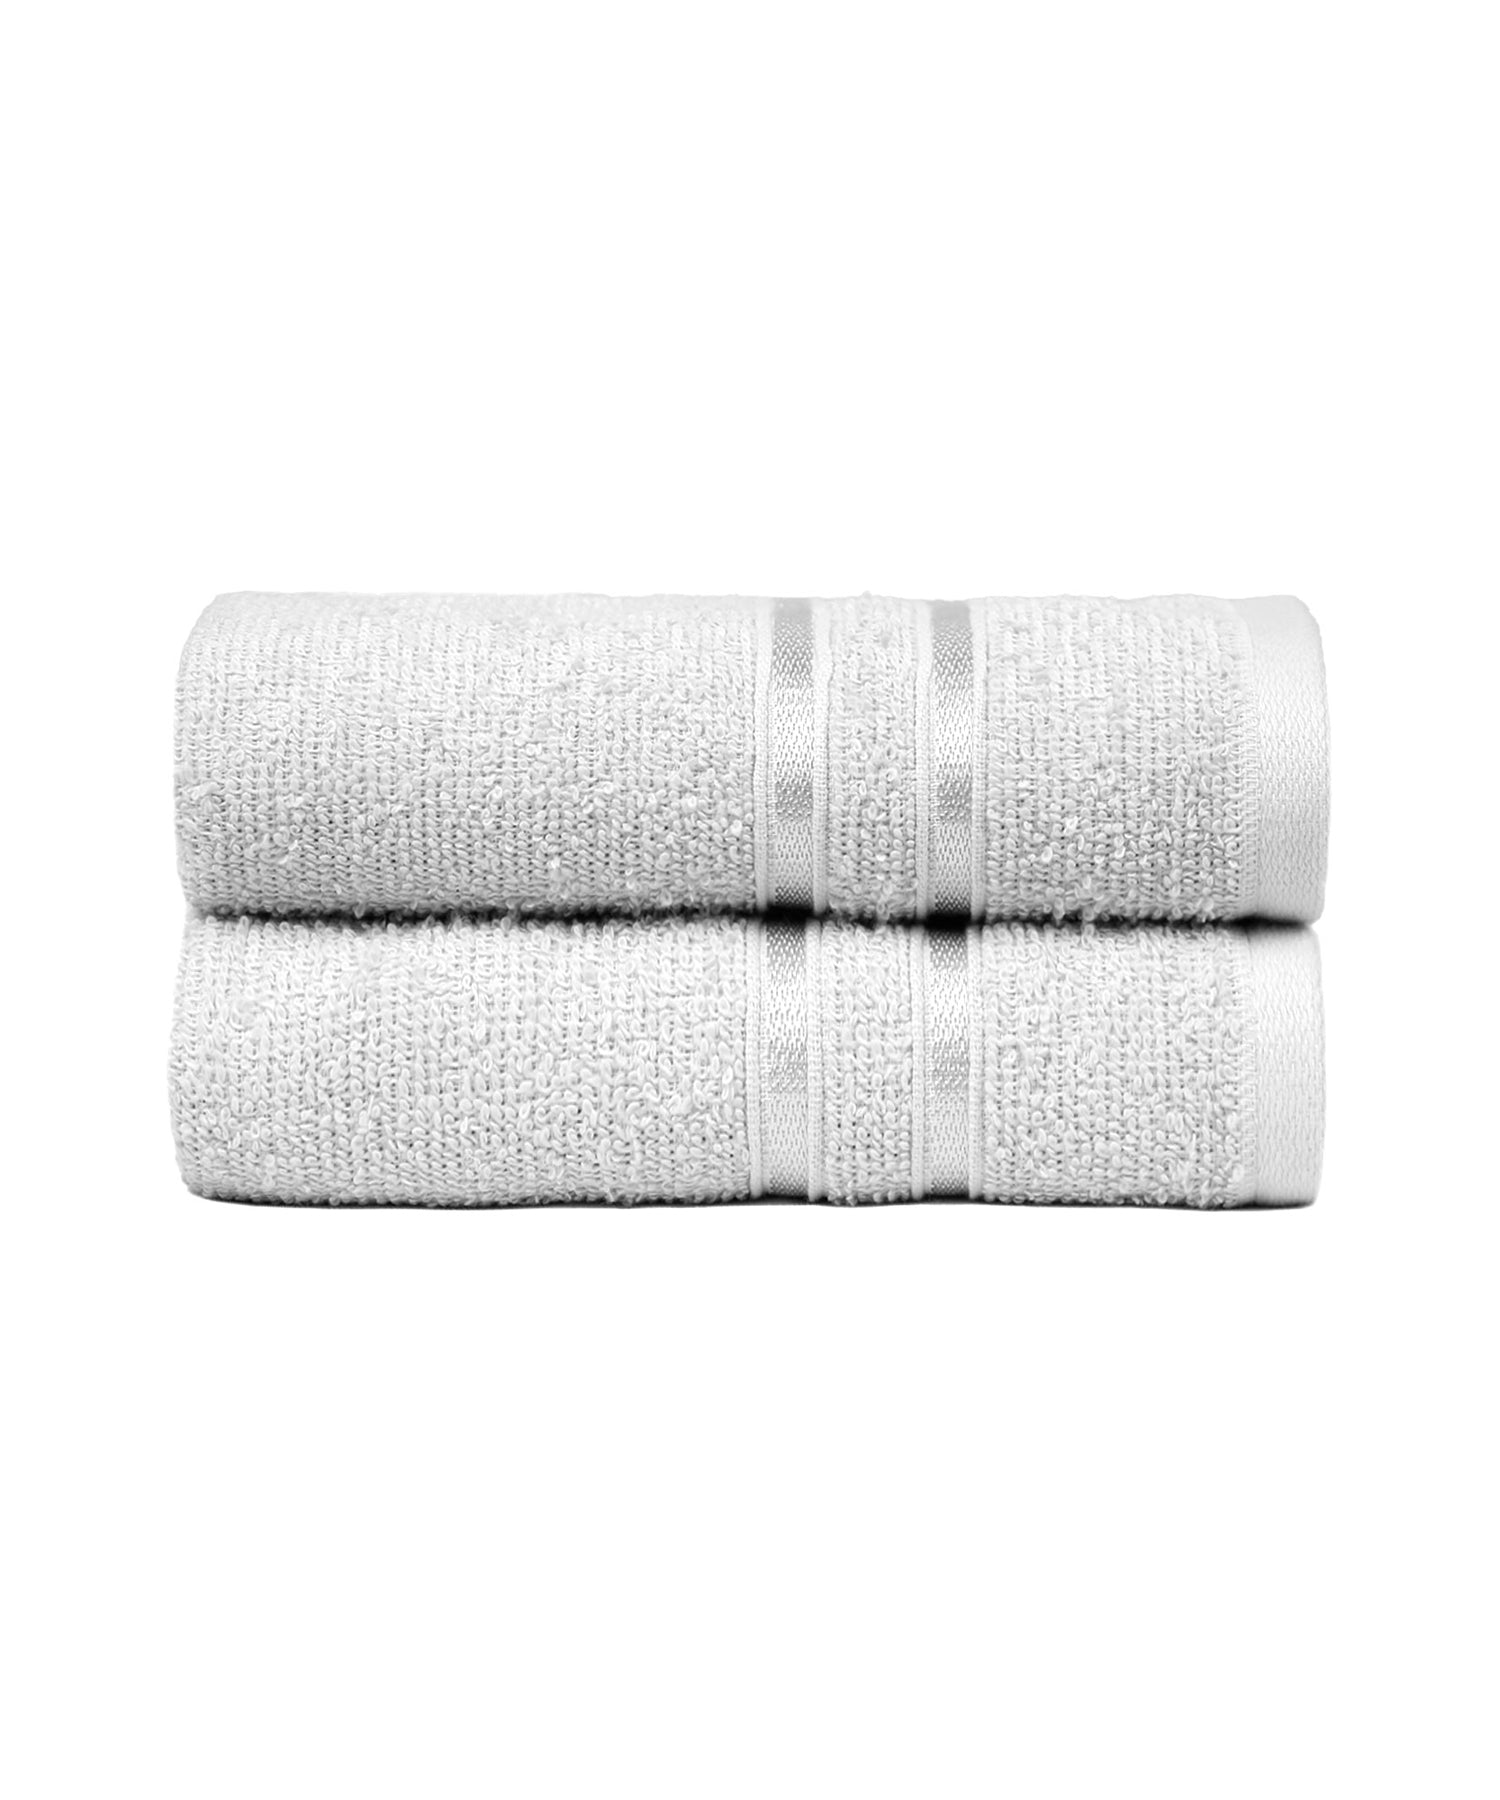 2Pc Hand Towel ₹239/-